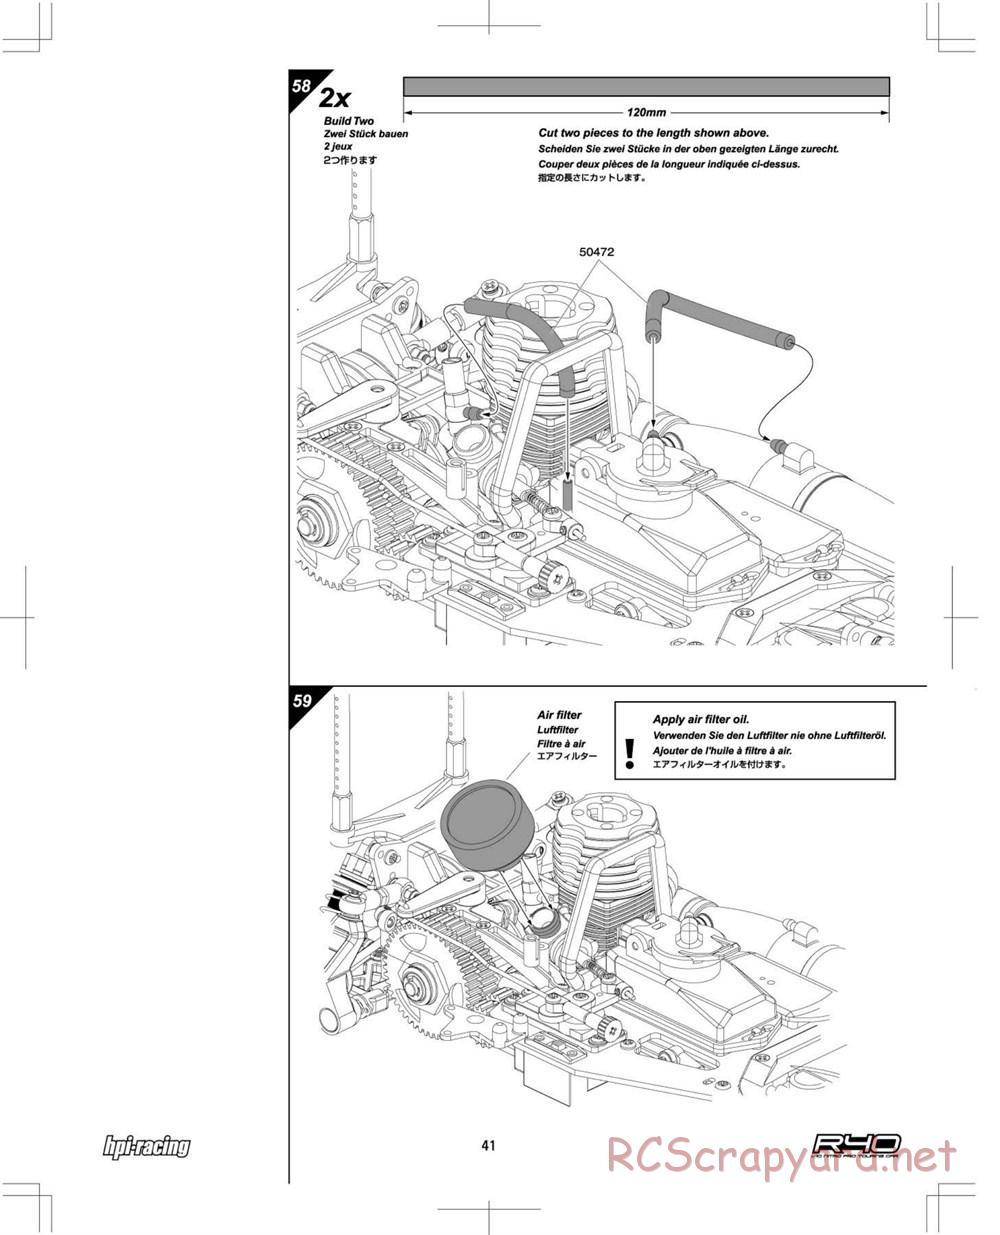 HPI - R40 Nitro Touring Car - Manual - Page 41